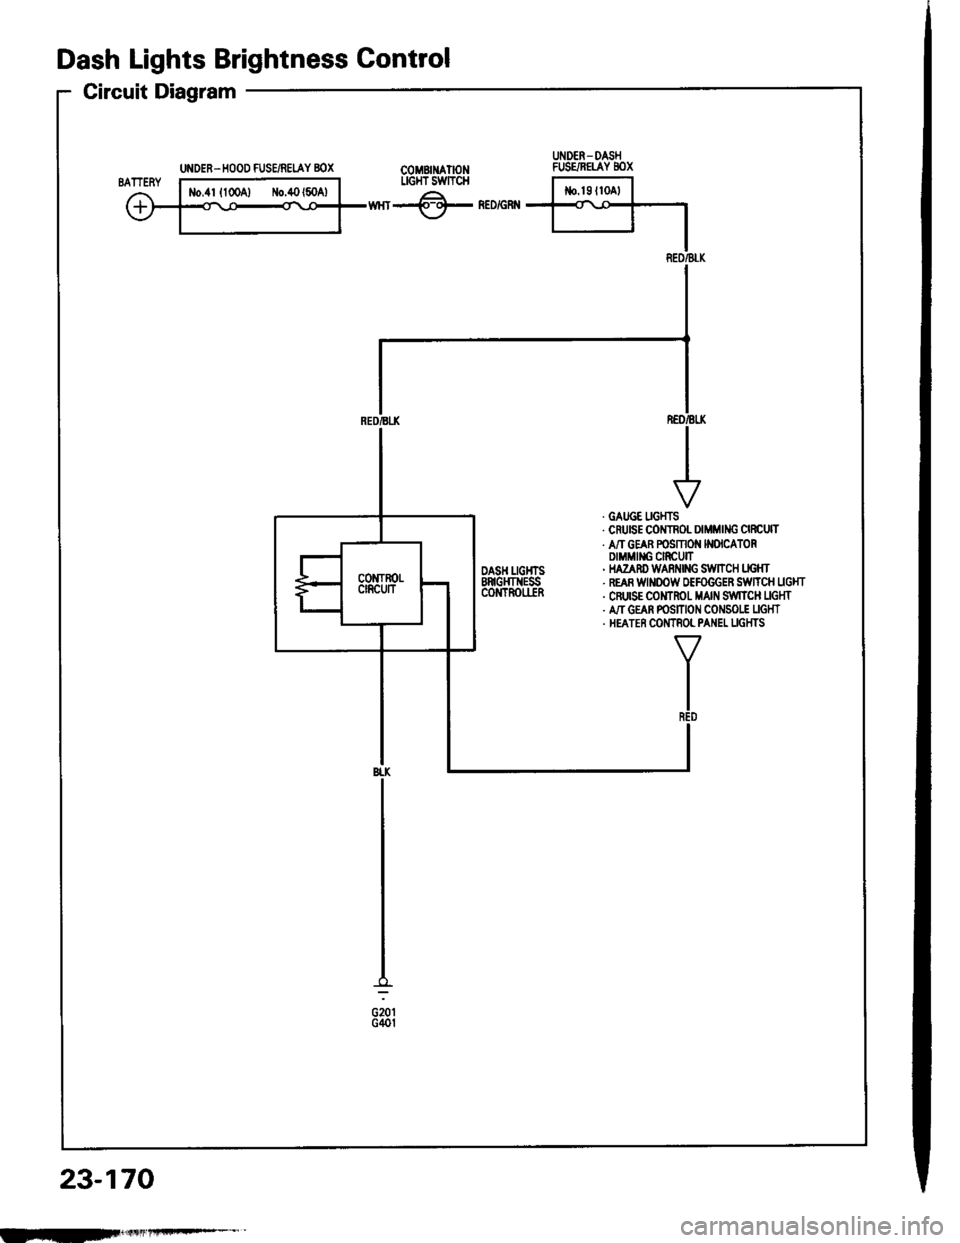 HONDA INTEGRA 1994 4.G User Guide UNDER. HOOD FUSE/REIAY 8OX
Dash Lights Brightness Gontrol
Circuit Diagram
COMBII{ATIONLIGI{T SWTTCH
wnr-@- neorenn
REO/BLK
. GATJGE UGHTS. CruEE COITNOL DIMMING CIRCUTT. A/T GEAR POSMON N(ICATORDIMMII